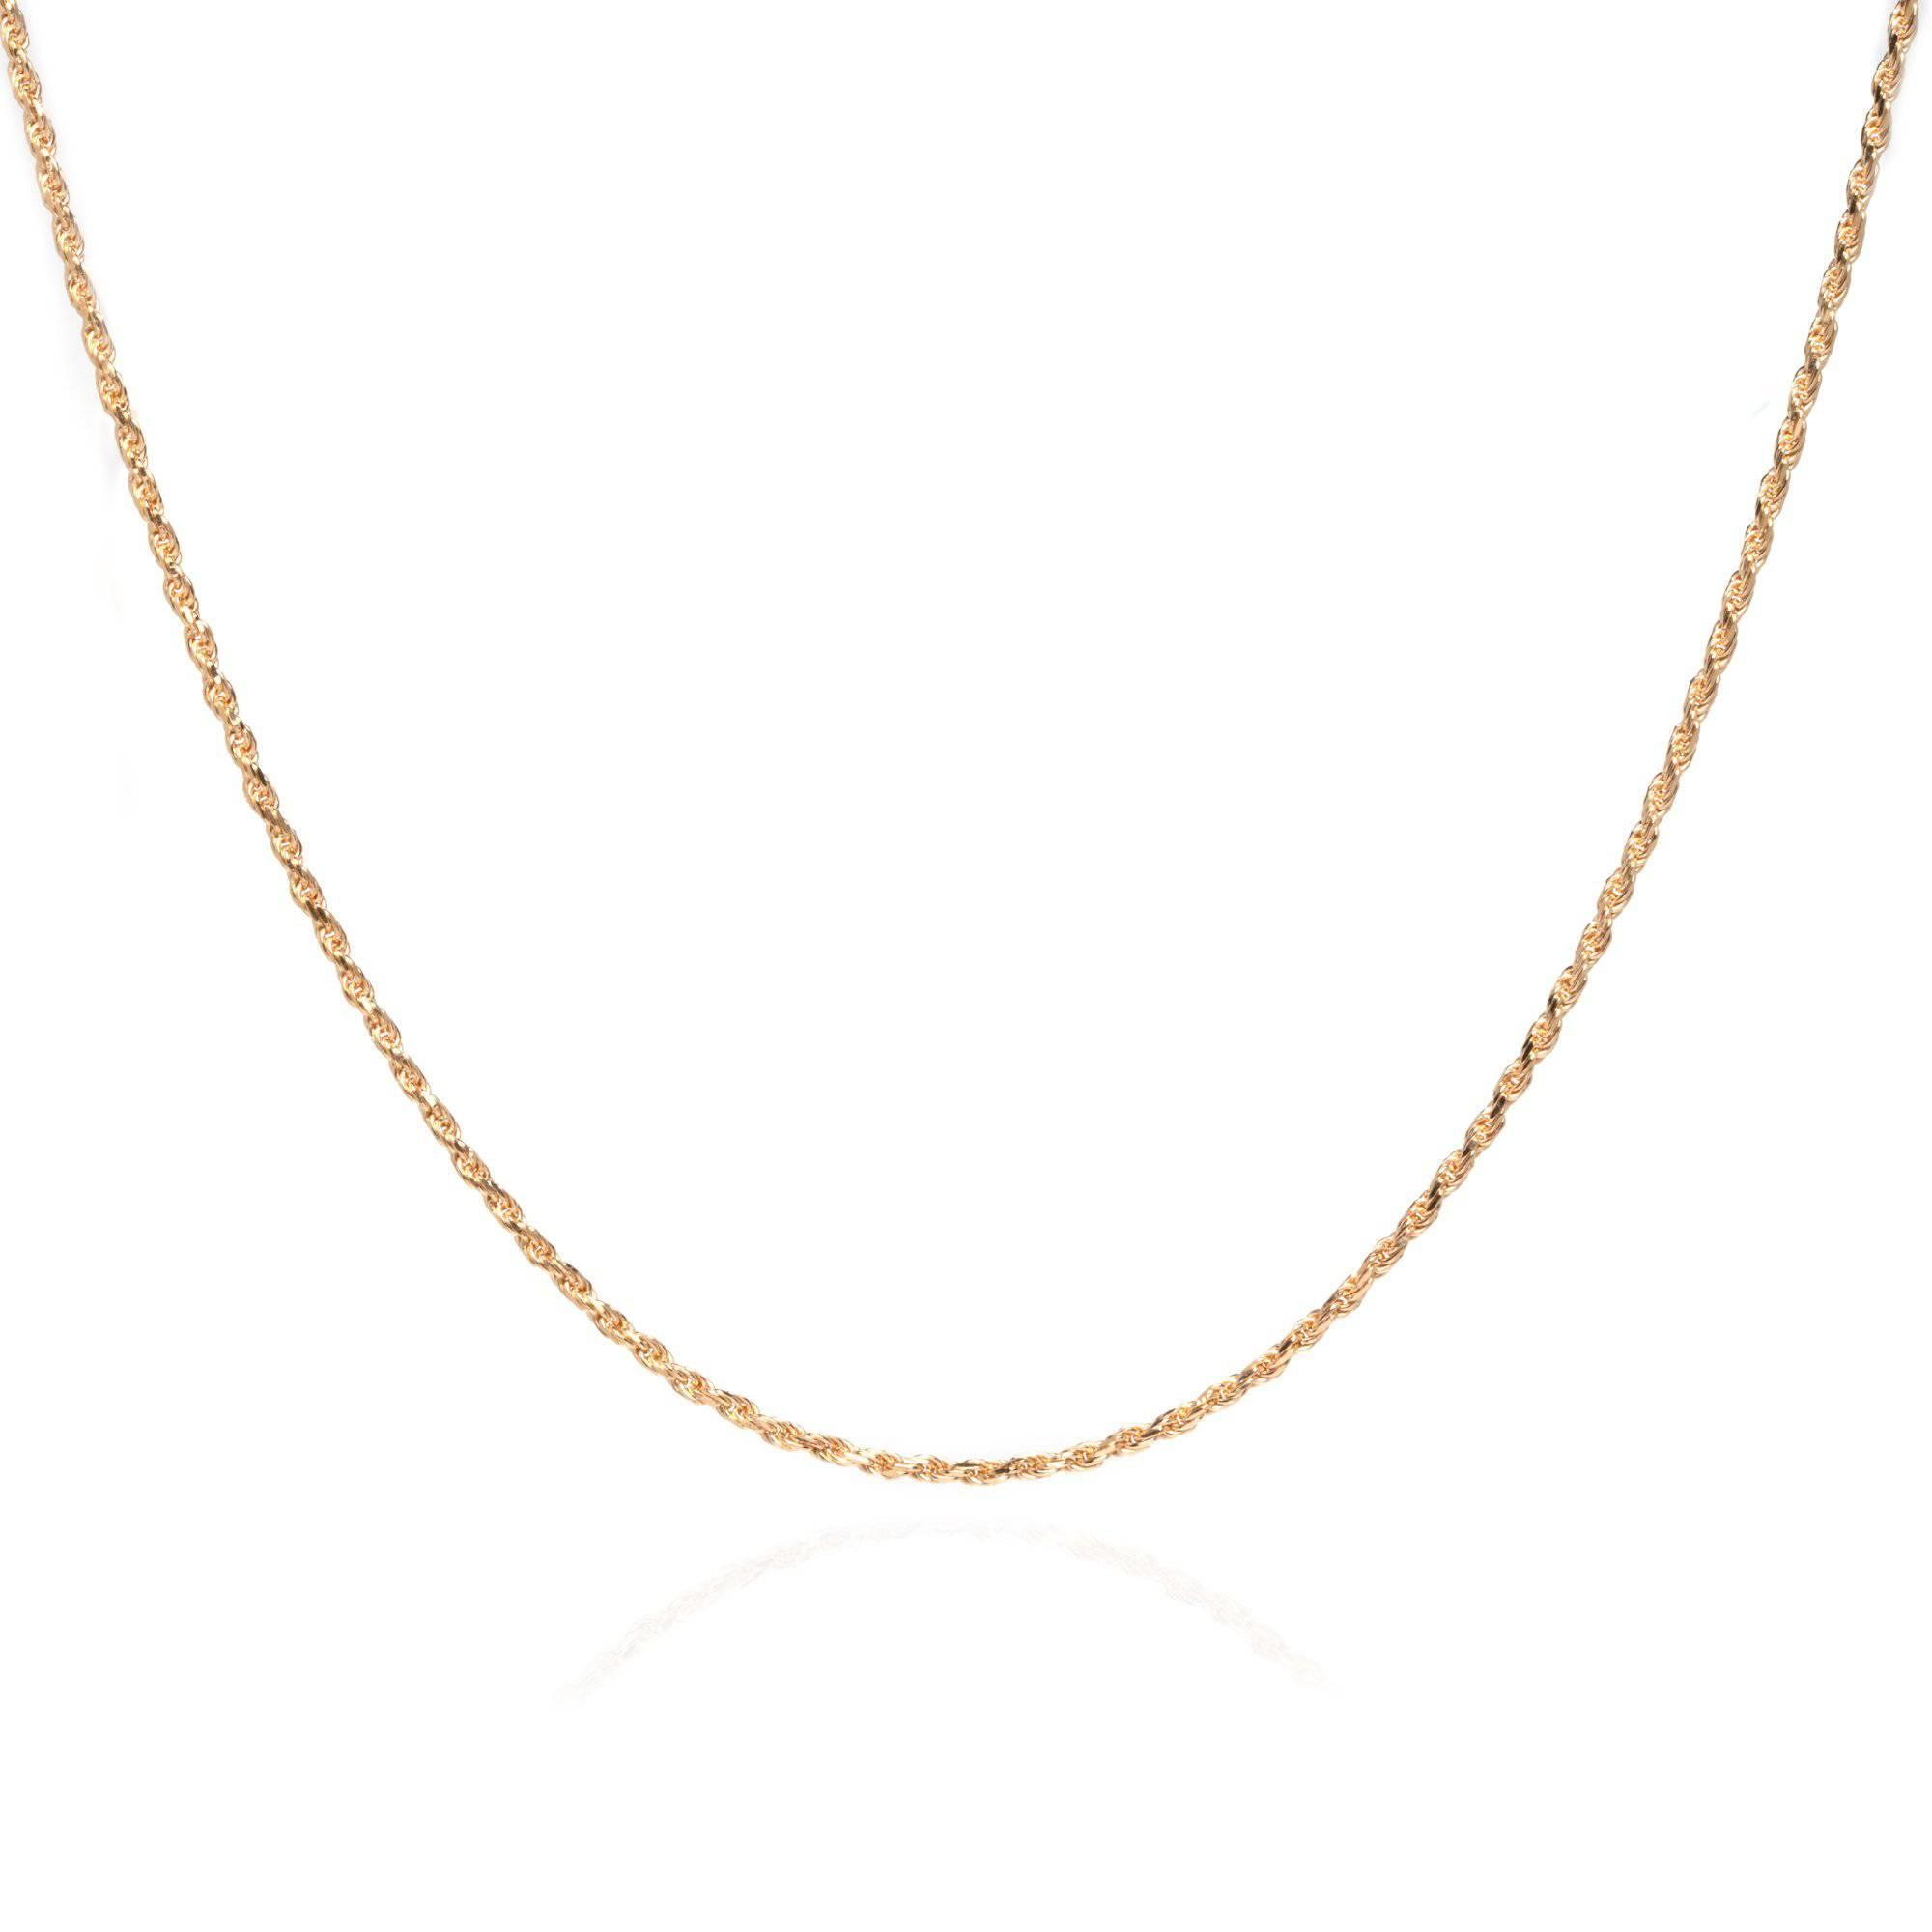 Rita 18k Gold Rope Chain Necklace - ELLA PALM